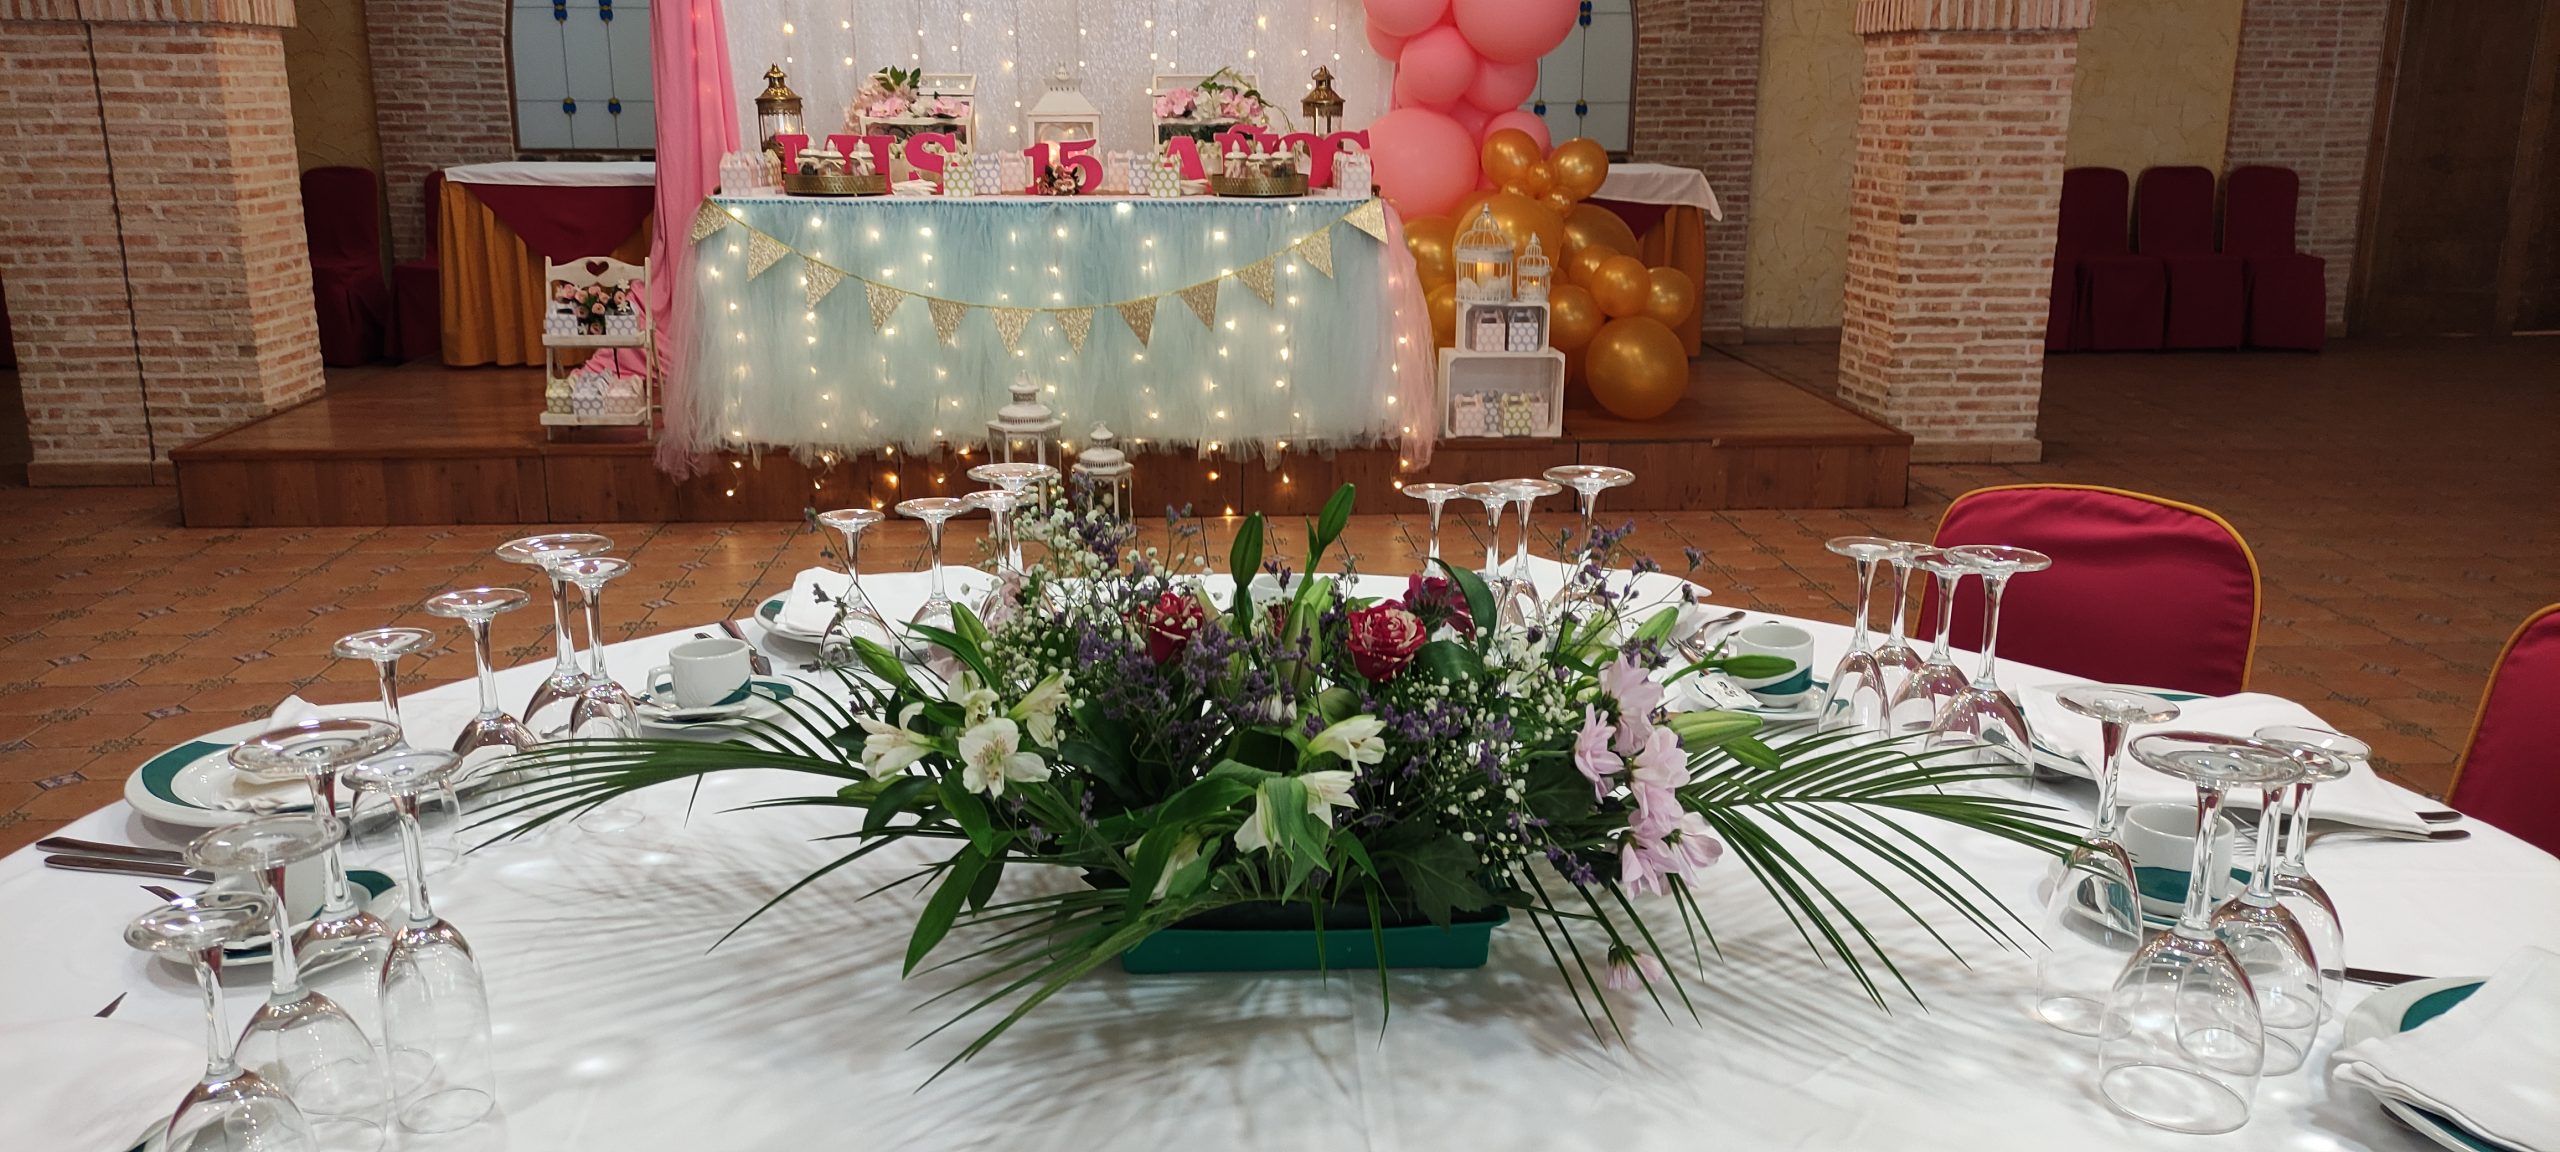 eventlove-partydecoration-quinceañera-cumpleaños-birthday-boda-bautizo-comuniones-primeracomunion-babyshower-mesa